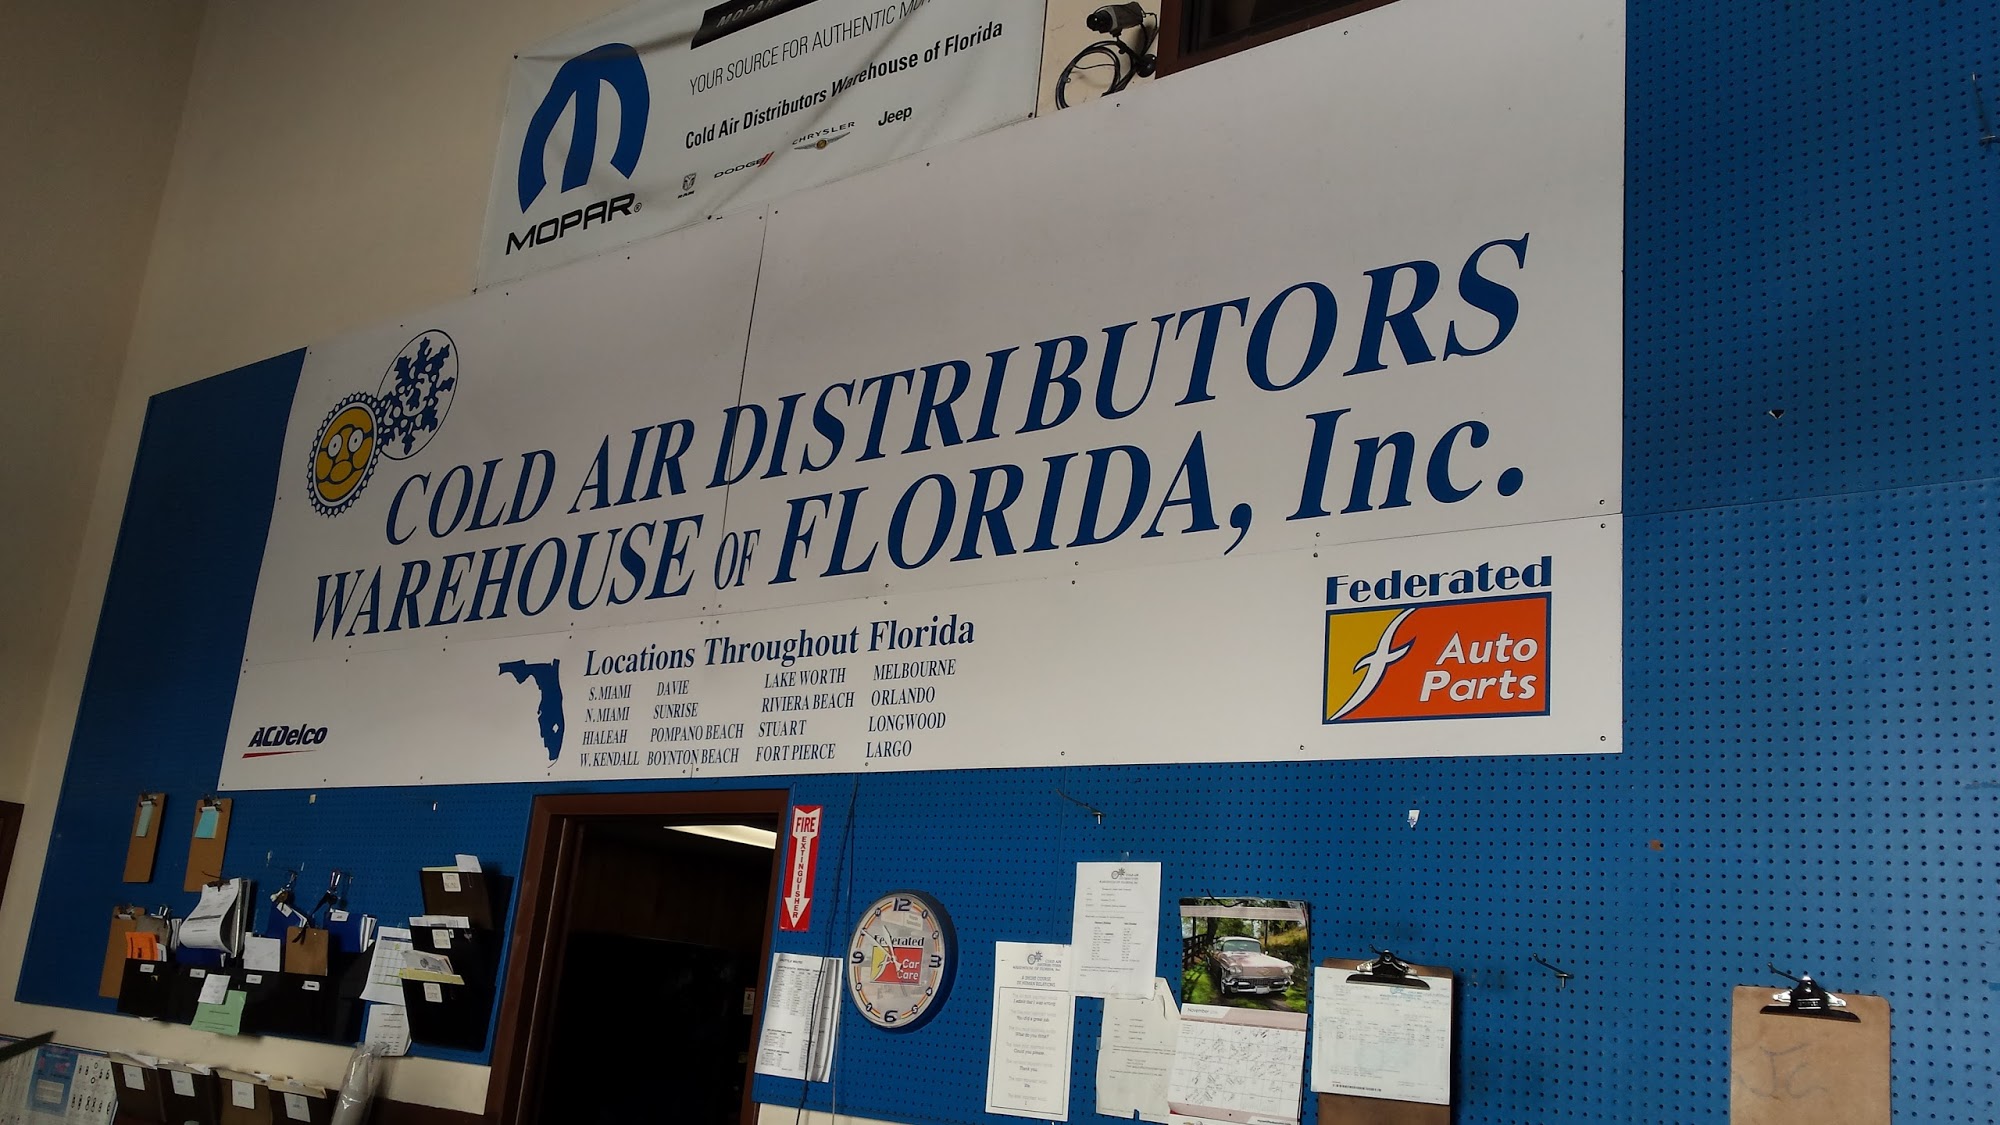 Cold Air Distributors Warehouse of Florida Inc